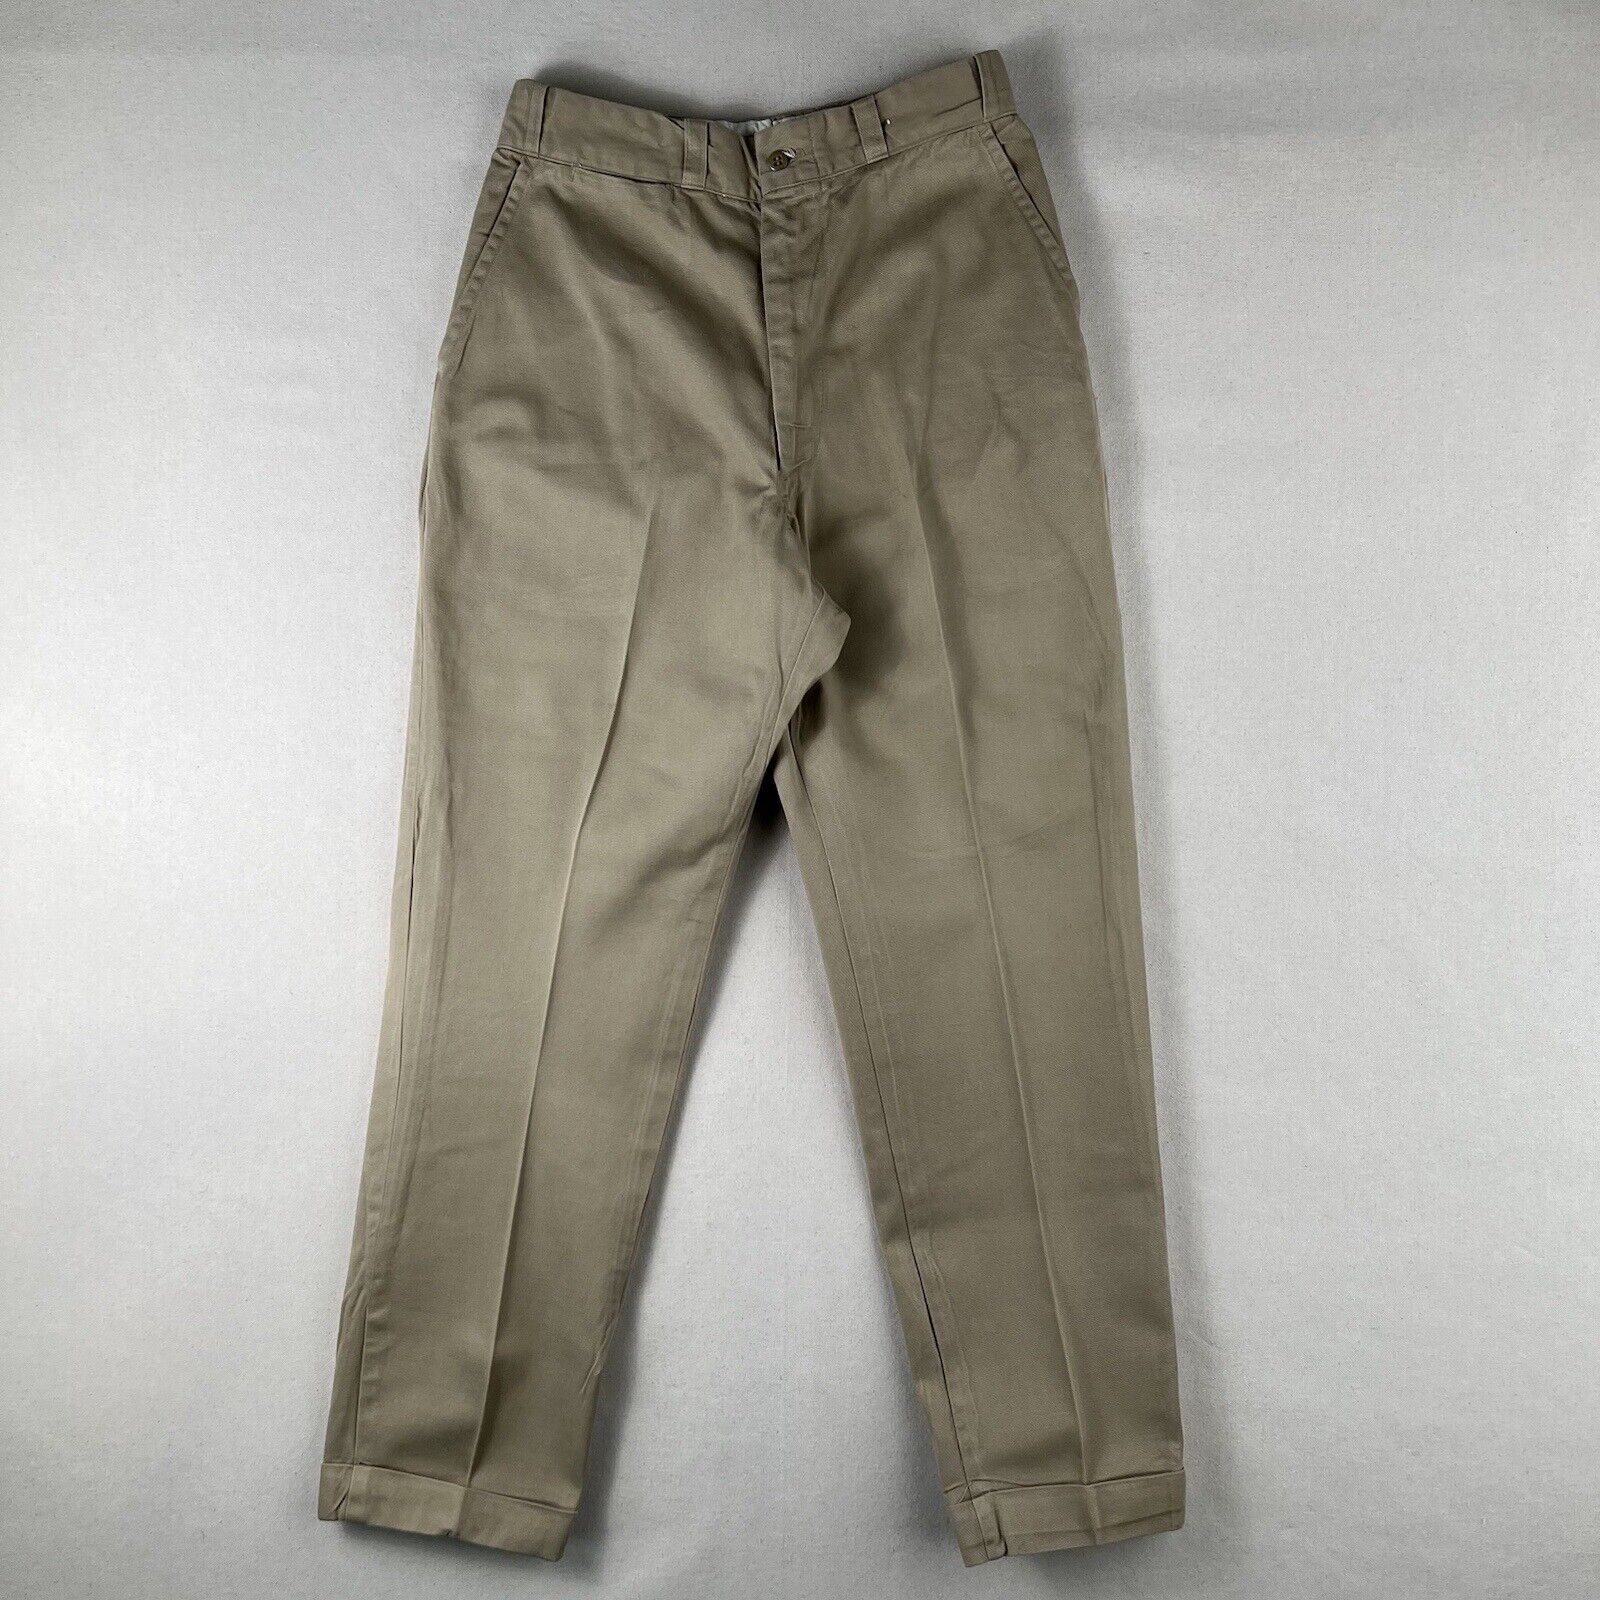 Vintage 1950s Army Twill Sanforized Trousers Men’s 32x30 Khaki High Rise Pants  